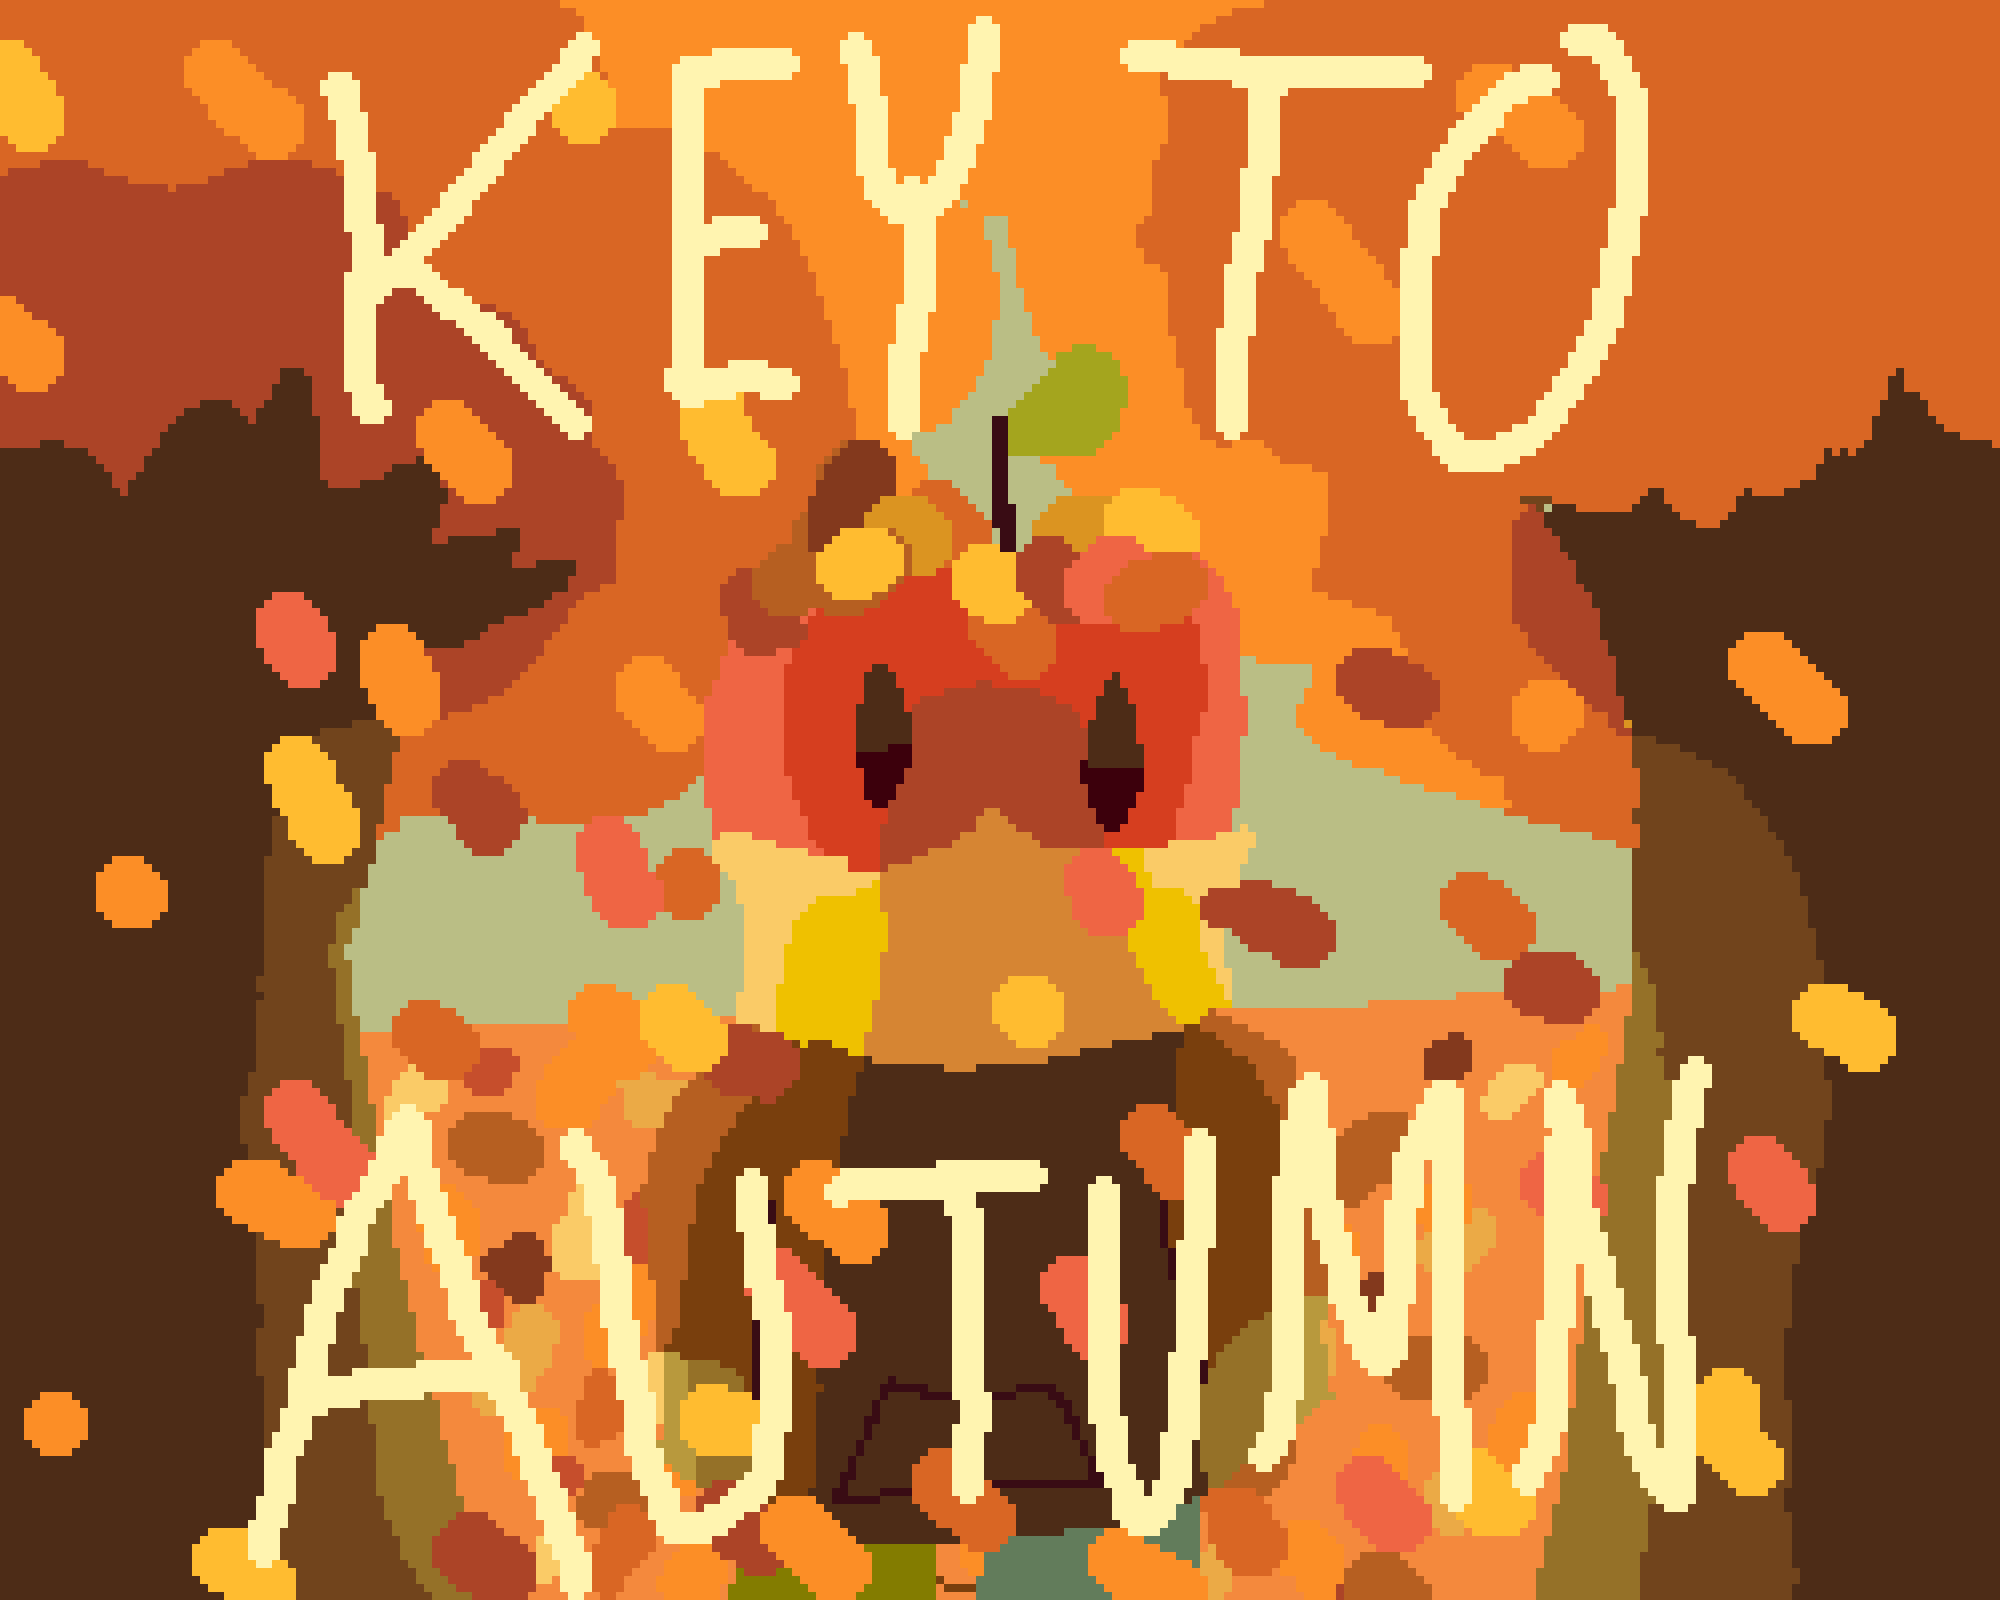 Key To Autumn (v1.1 update)